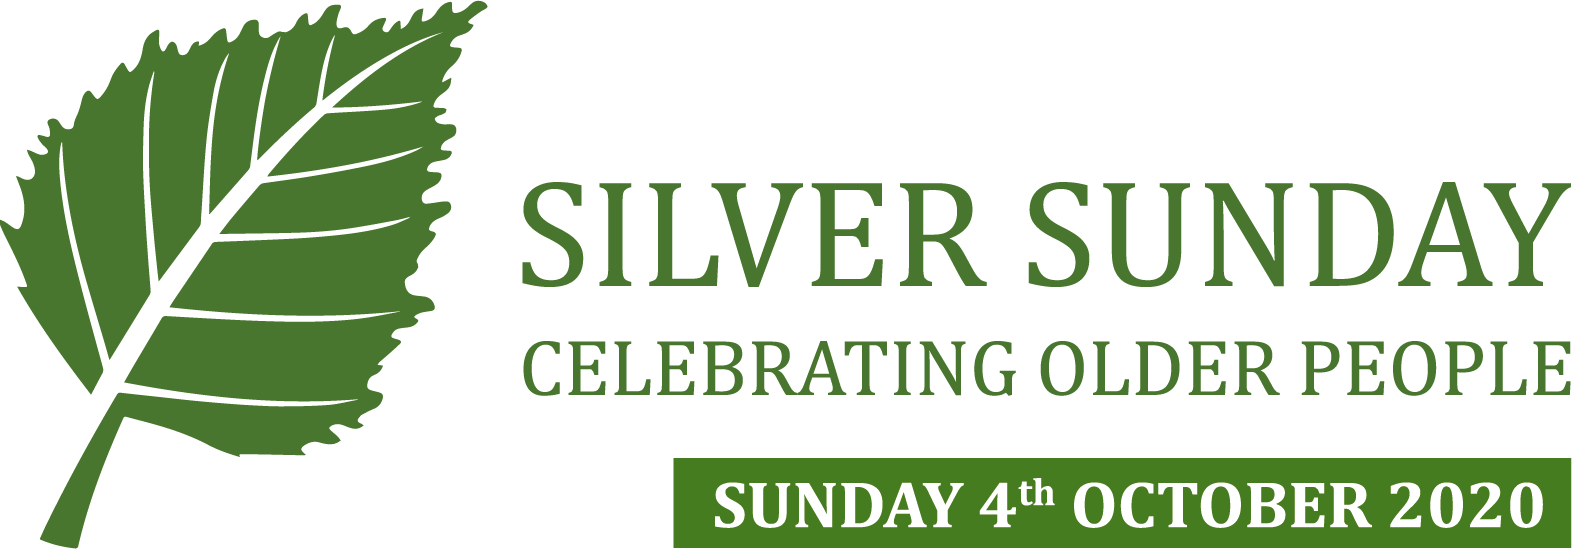 Silver Sunday logo